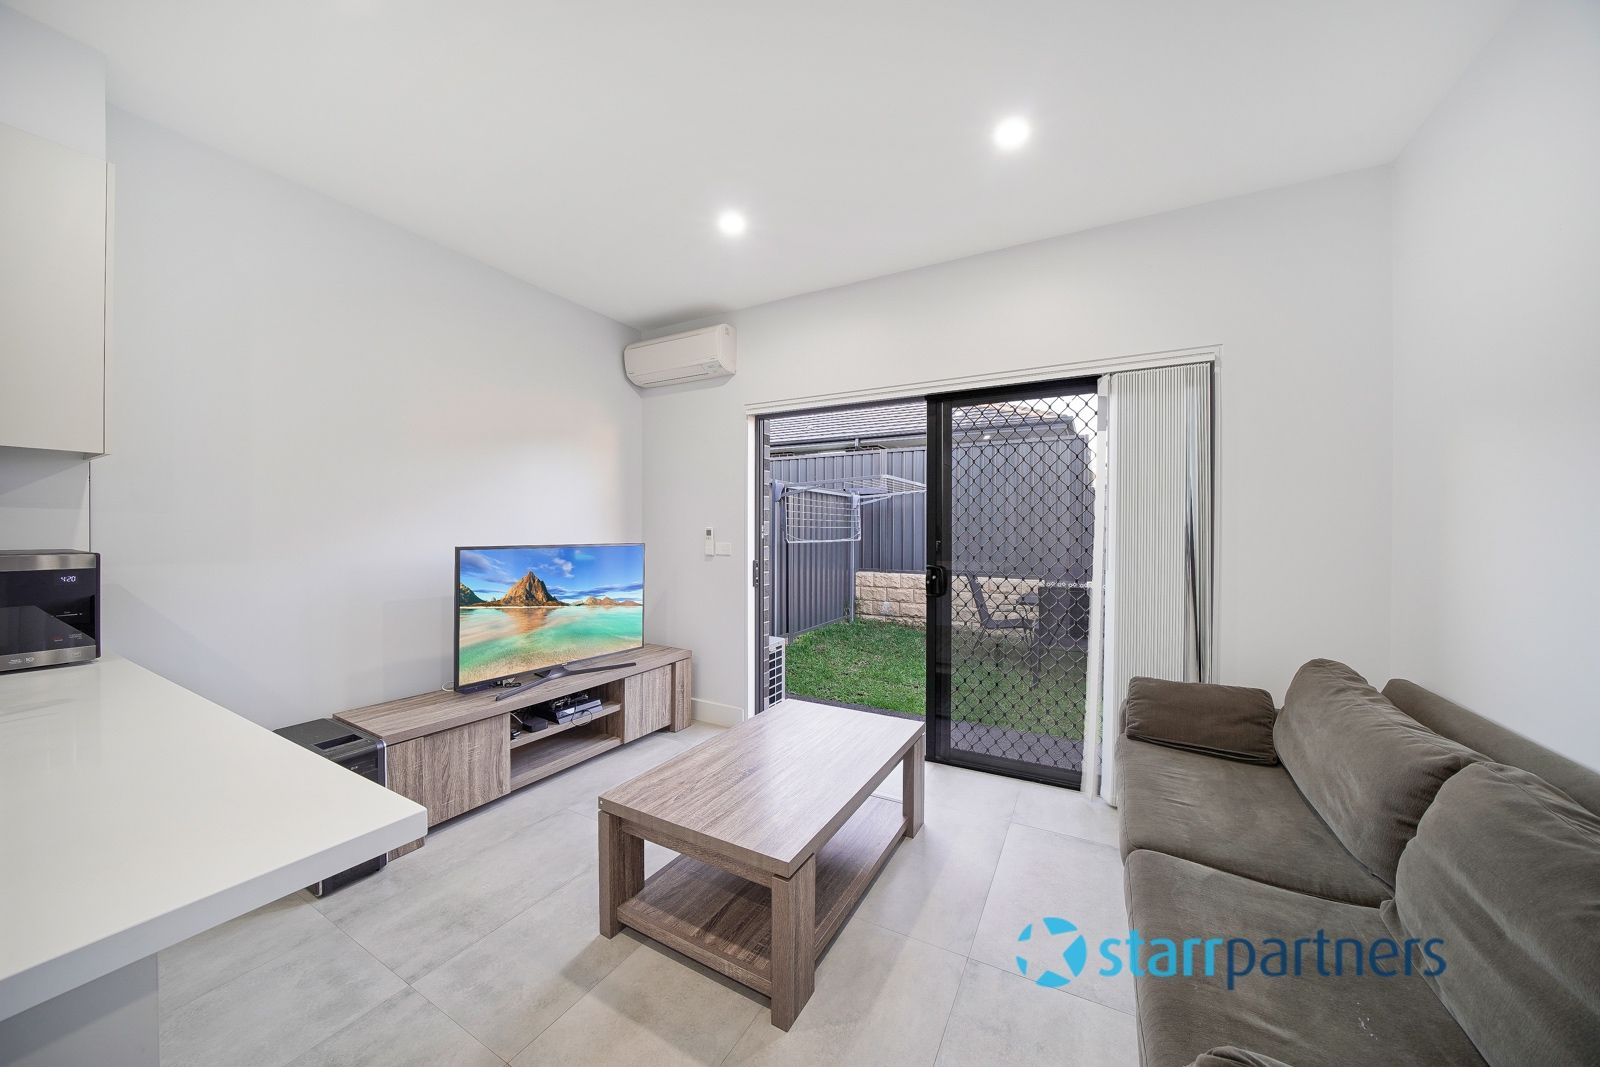 1 bedrooms House in 19b Eacott St LEPPINGTON NSW, 2179